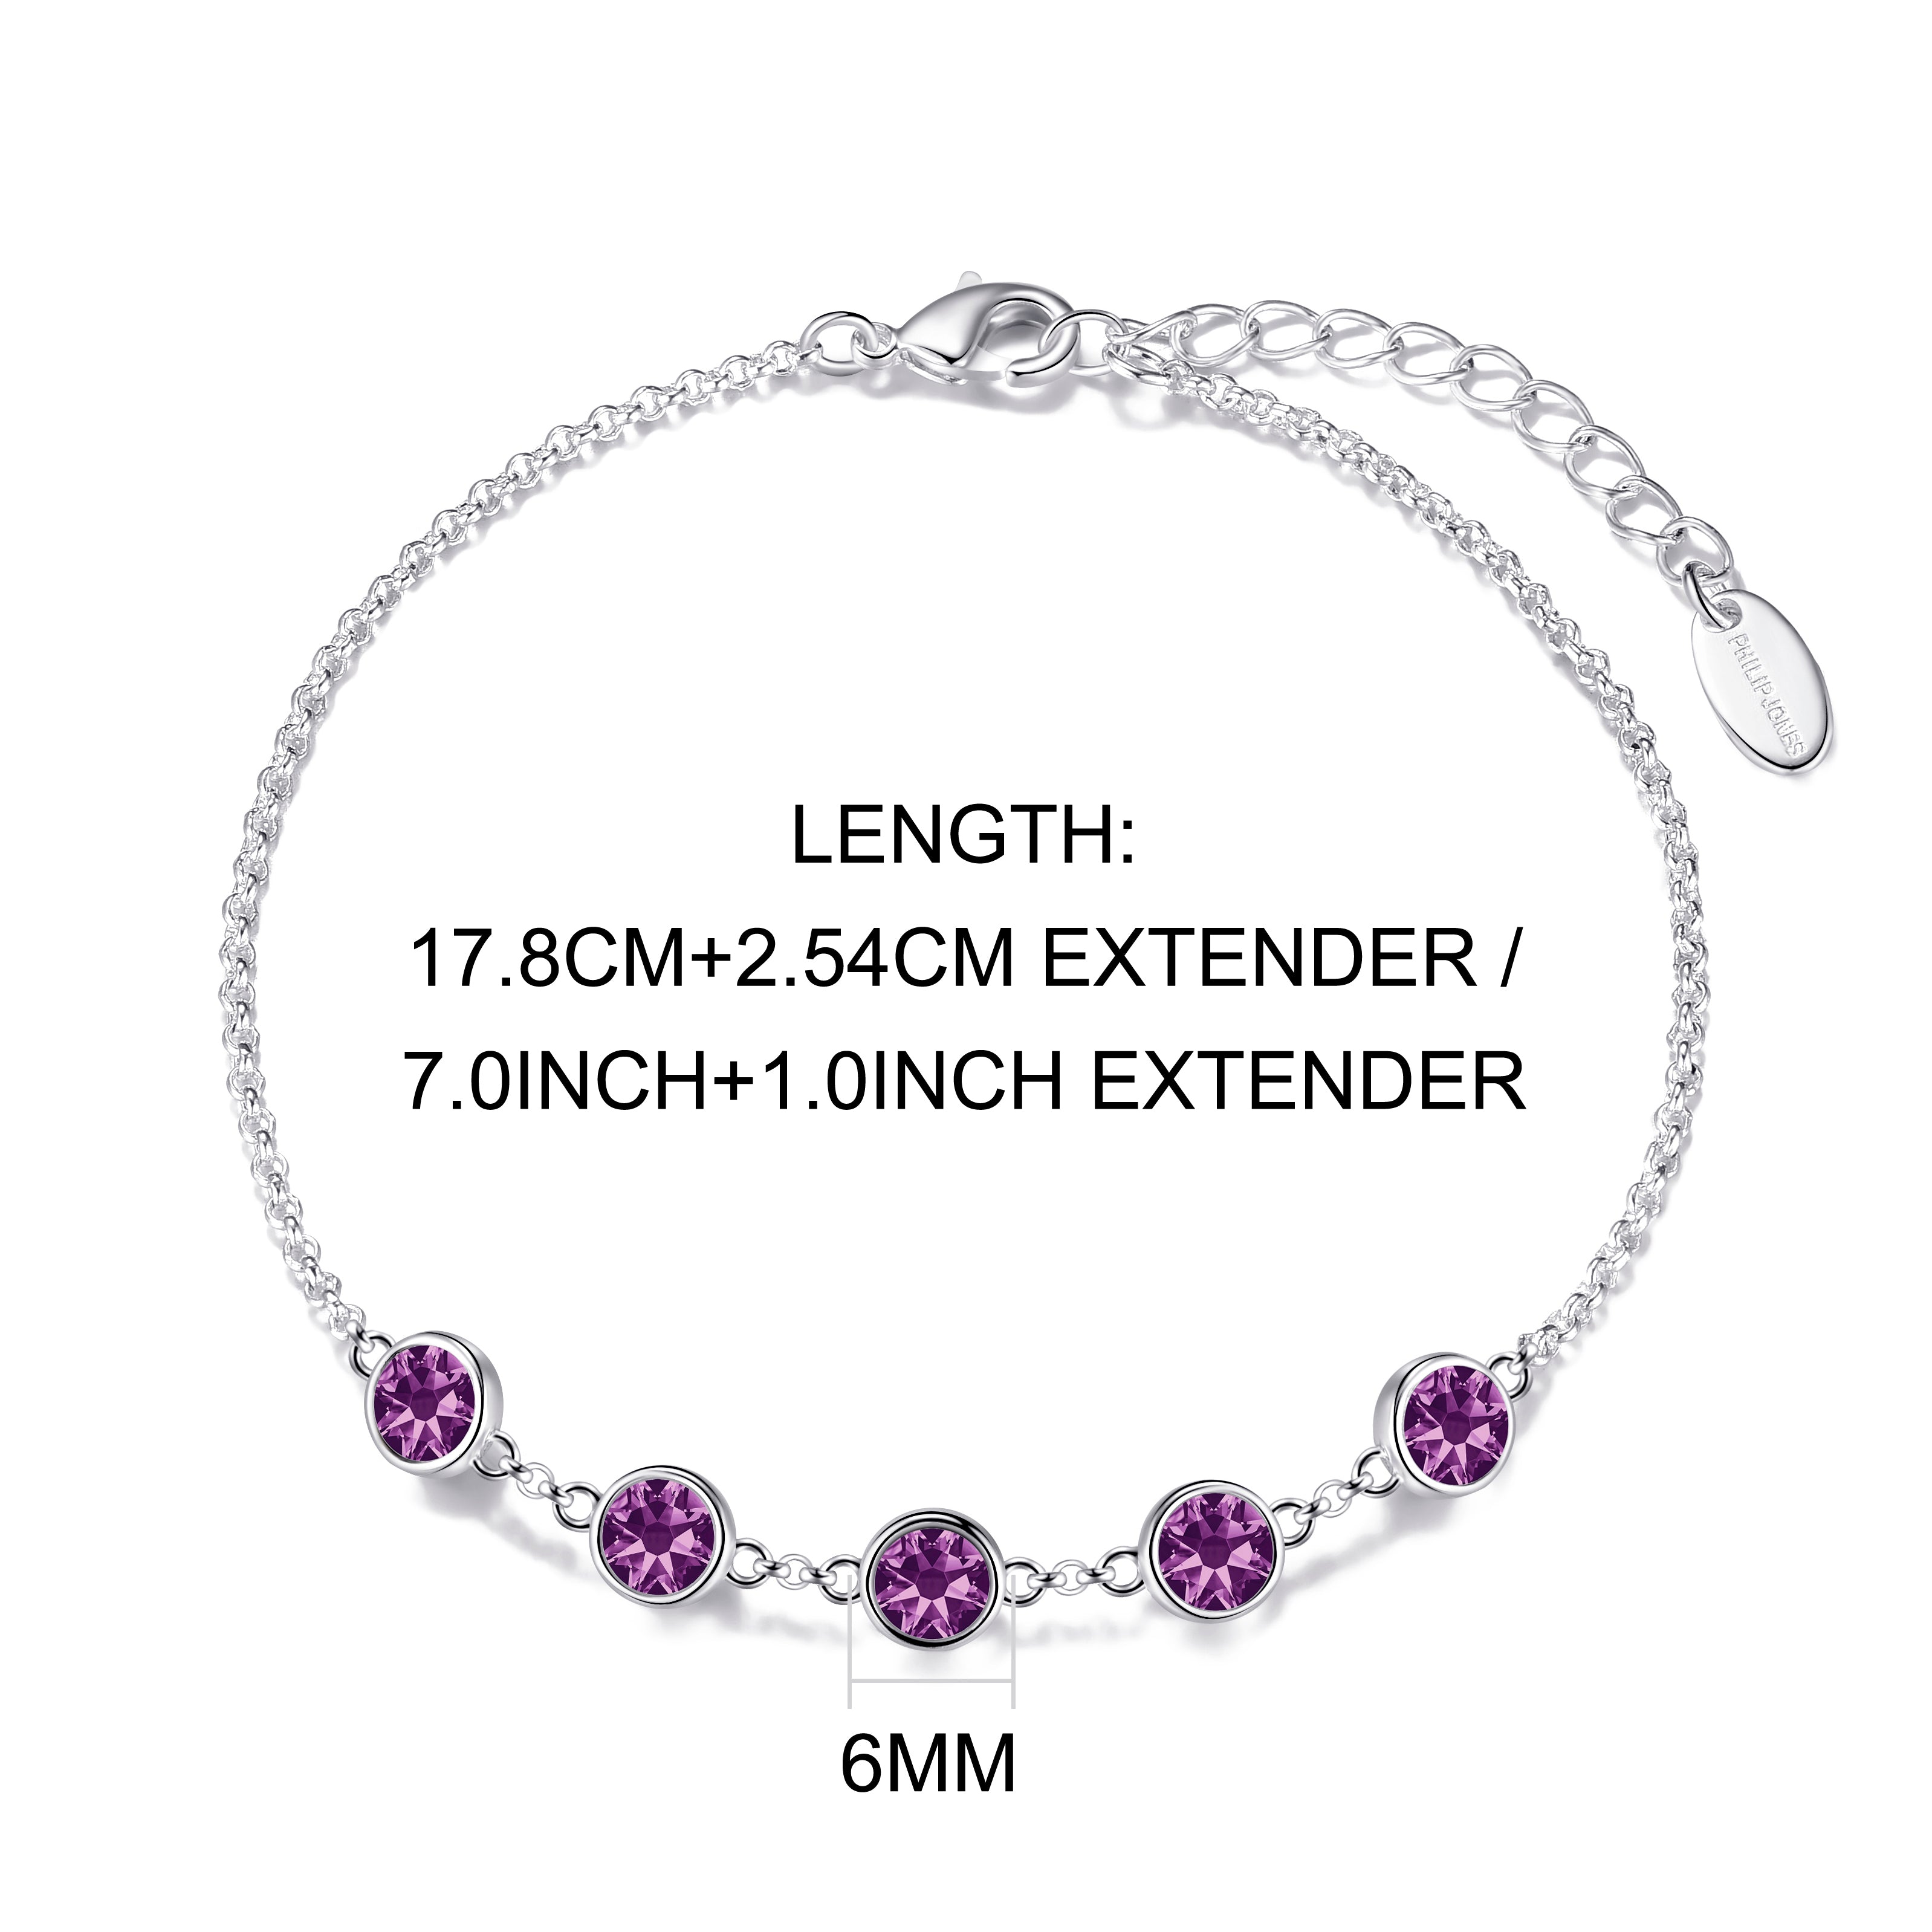 June Birthstone Bracelet Created with Alexandrite Zircondia® Crystals